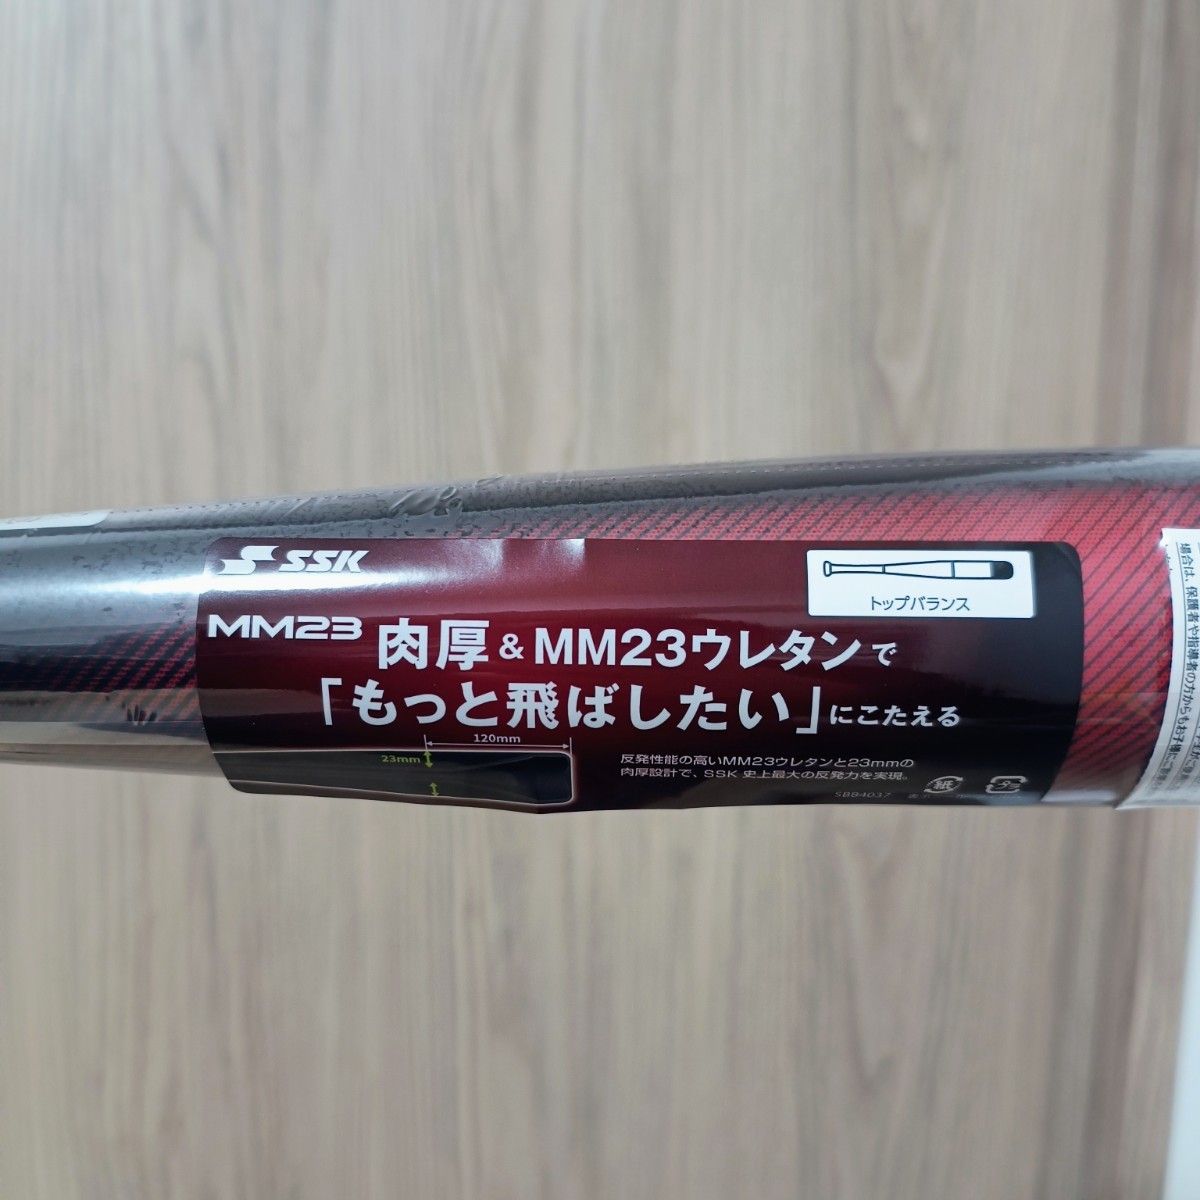 SSK MM23 トップバランス 85cm 740g平均 新品未使用 mm23 軟式 野球